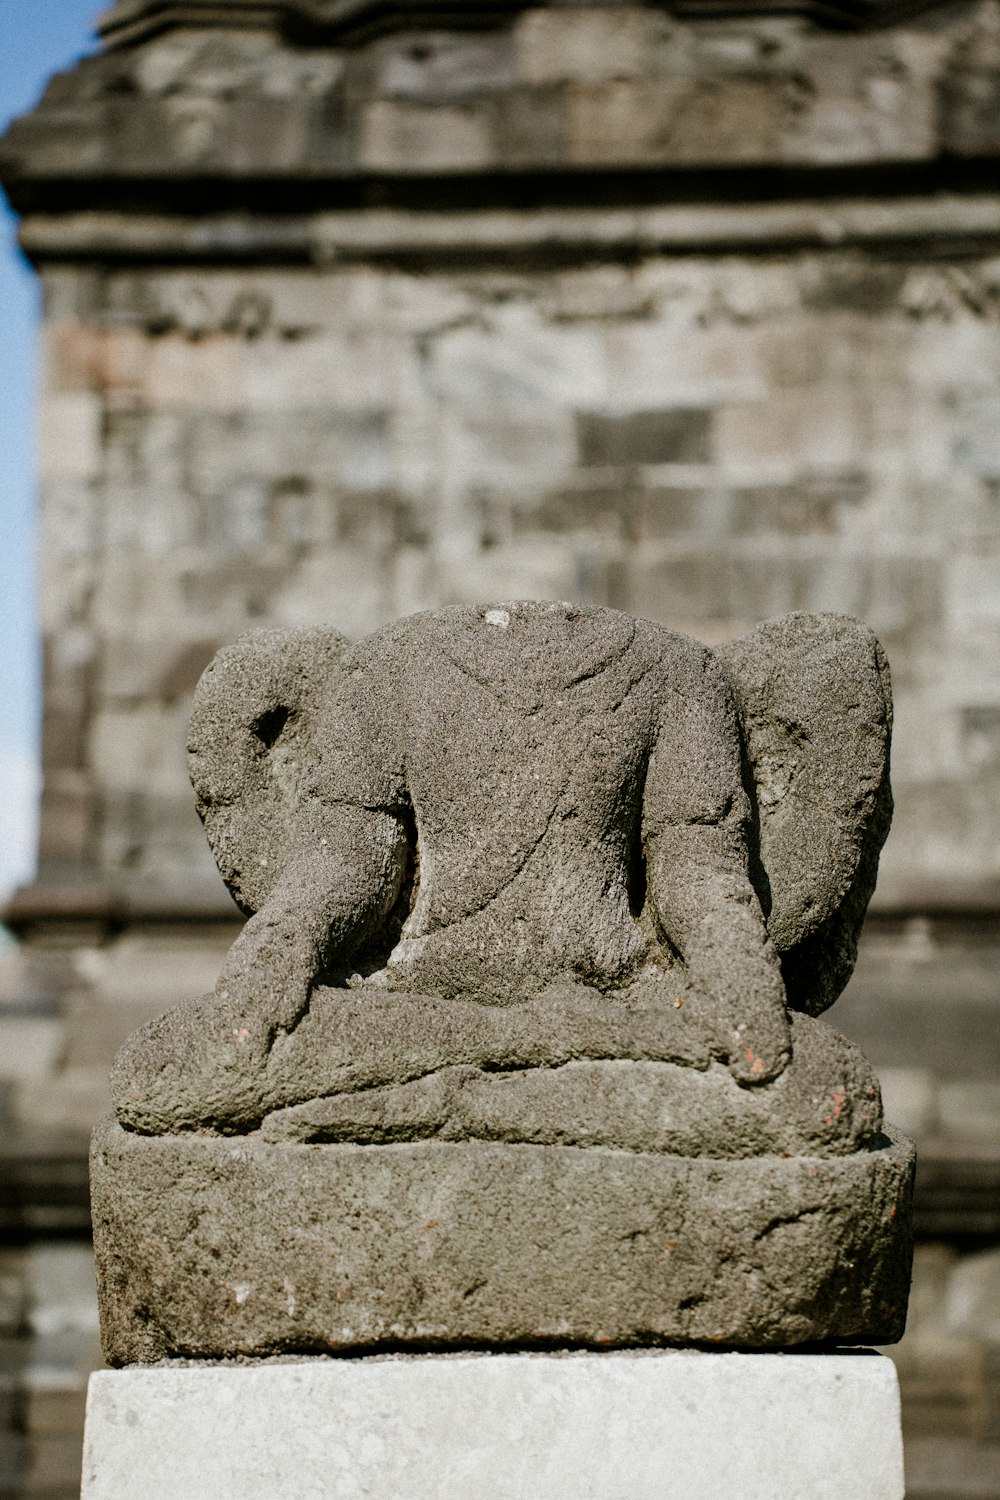 a stone statue of a bear on a pedestal